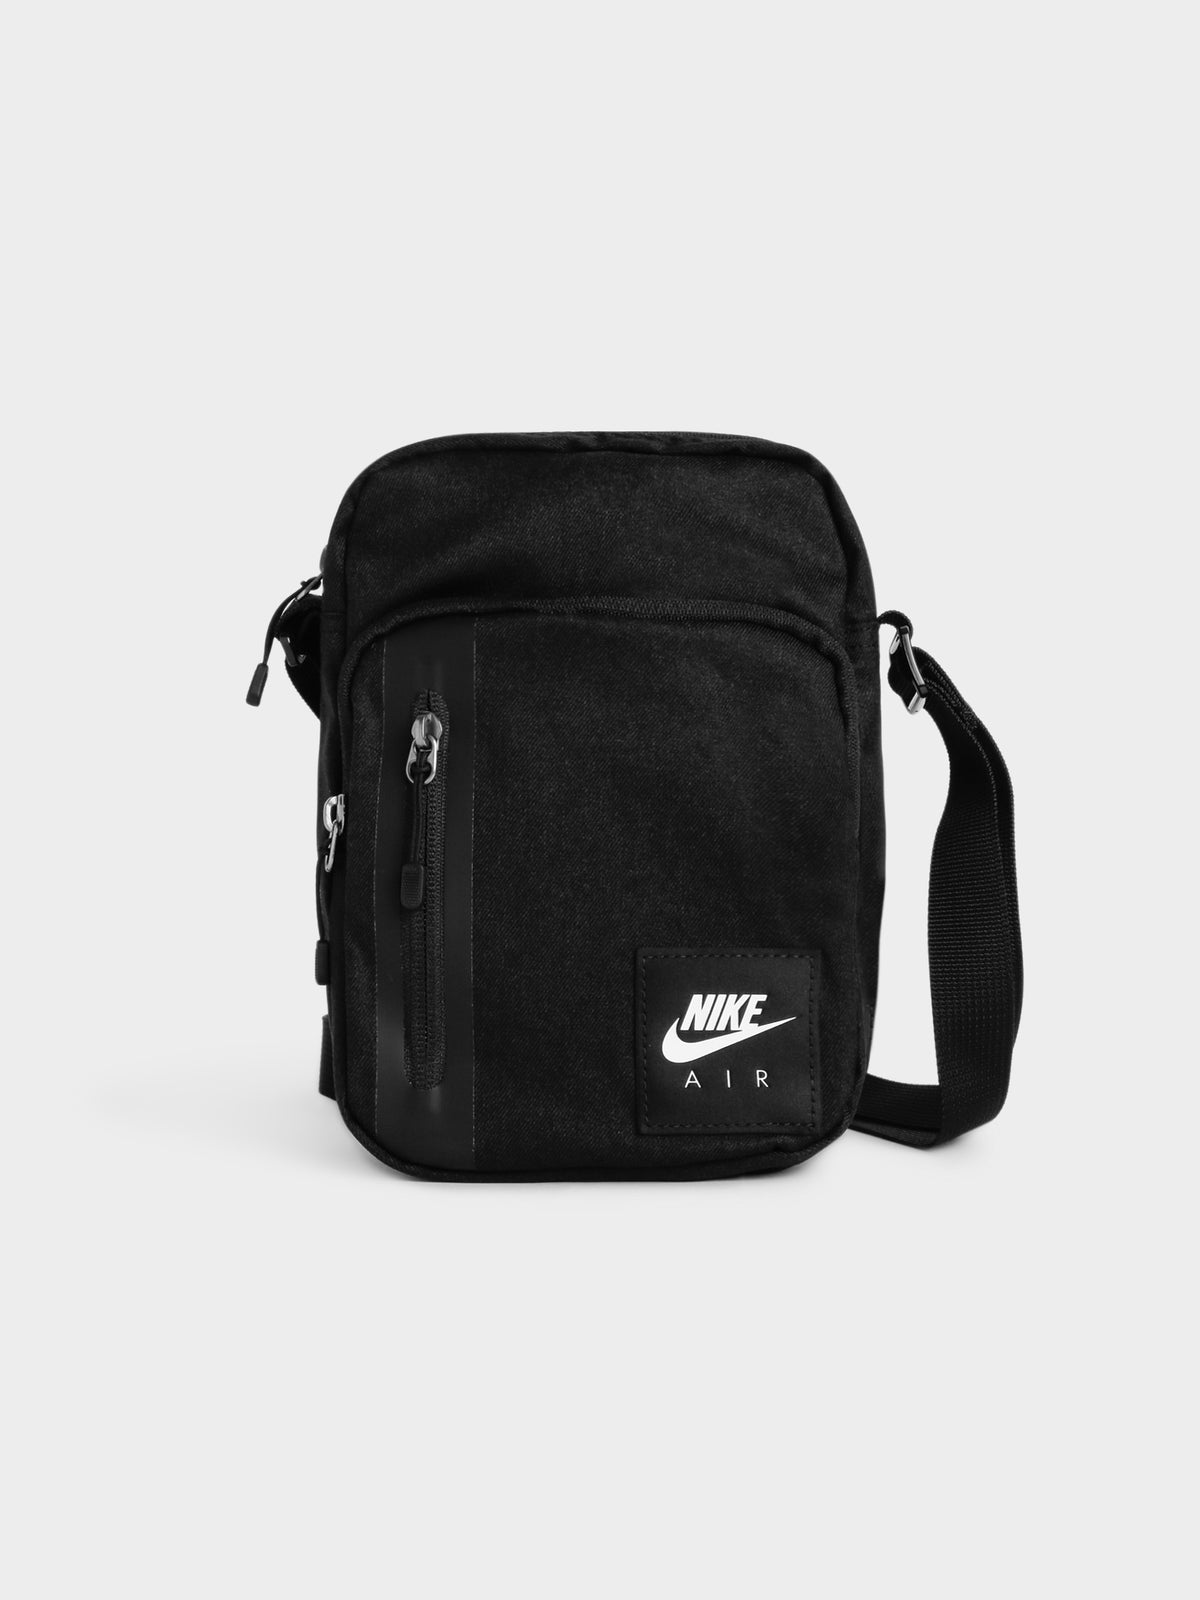 Tech Small Bag in Black